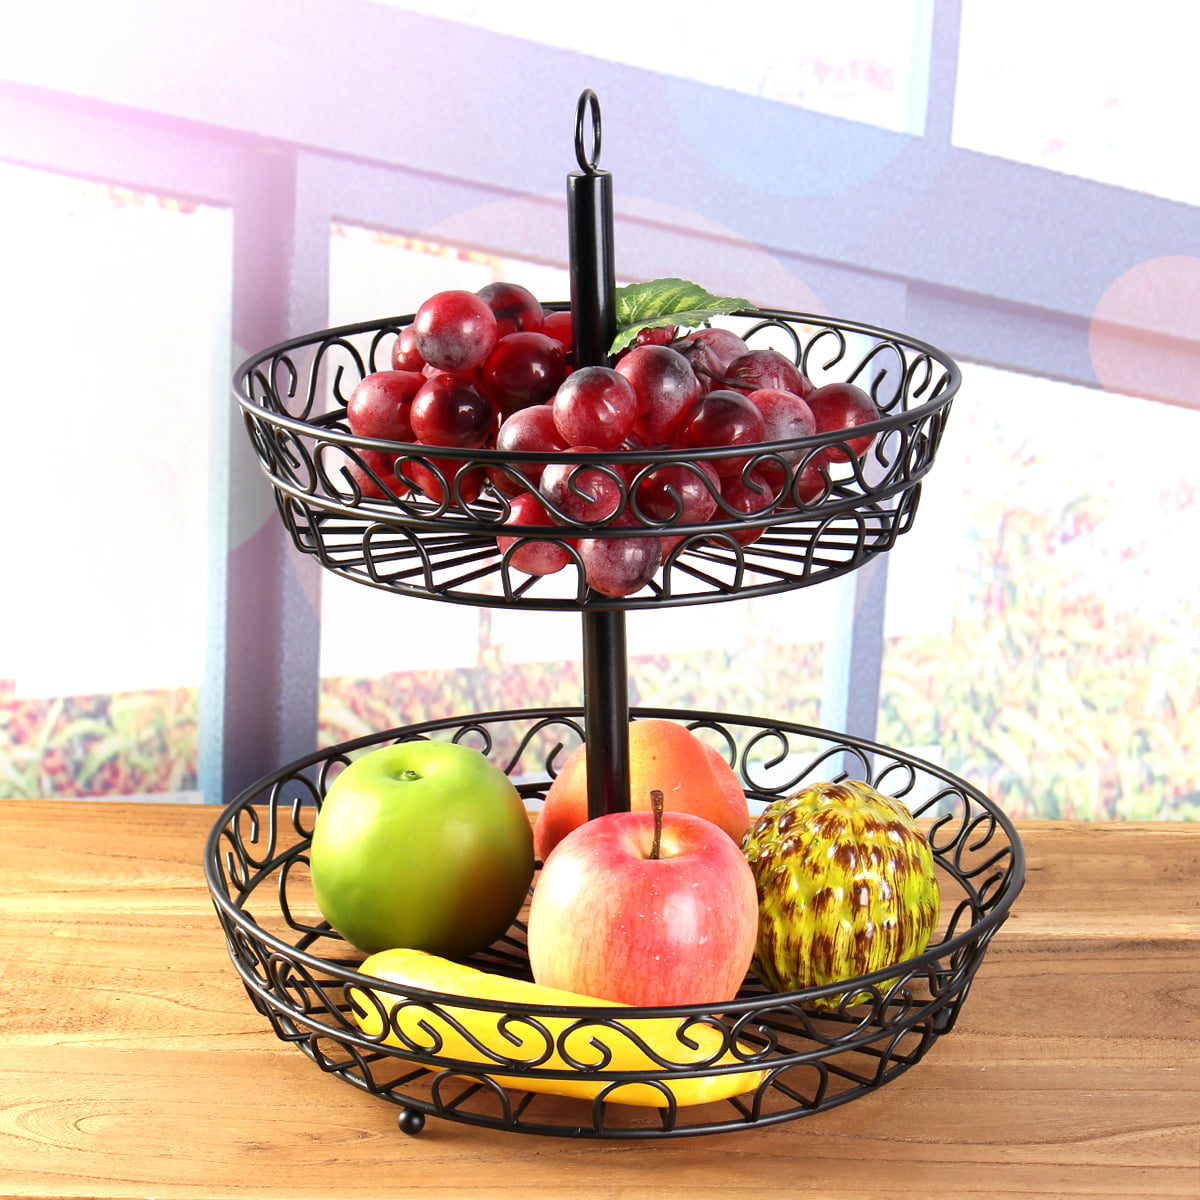 2 Tier Countertop Fruit Basket Holder,Fruit Storage Organiser Decorative Bowl Stand,Vegetables,Snacks for Household Items 